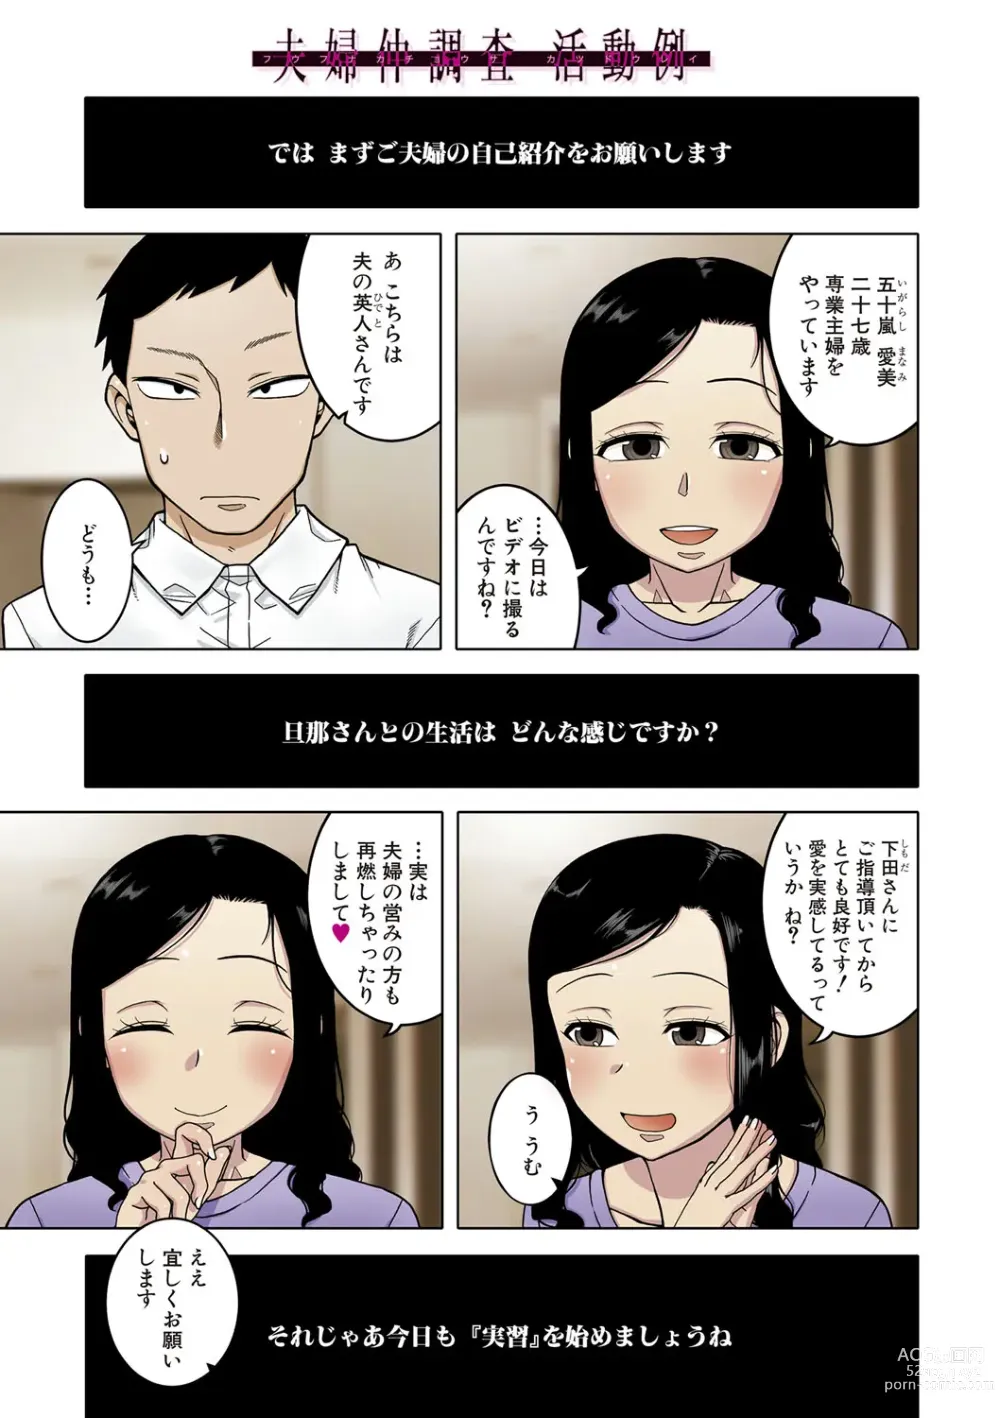 Page 4 of manga Saimin Fuufunaka Chousa - Investigate marital relationship with hypnosis